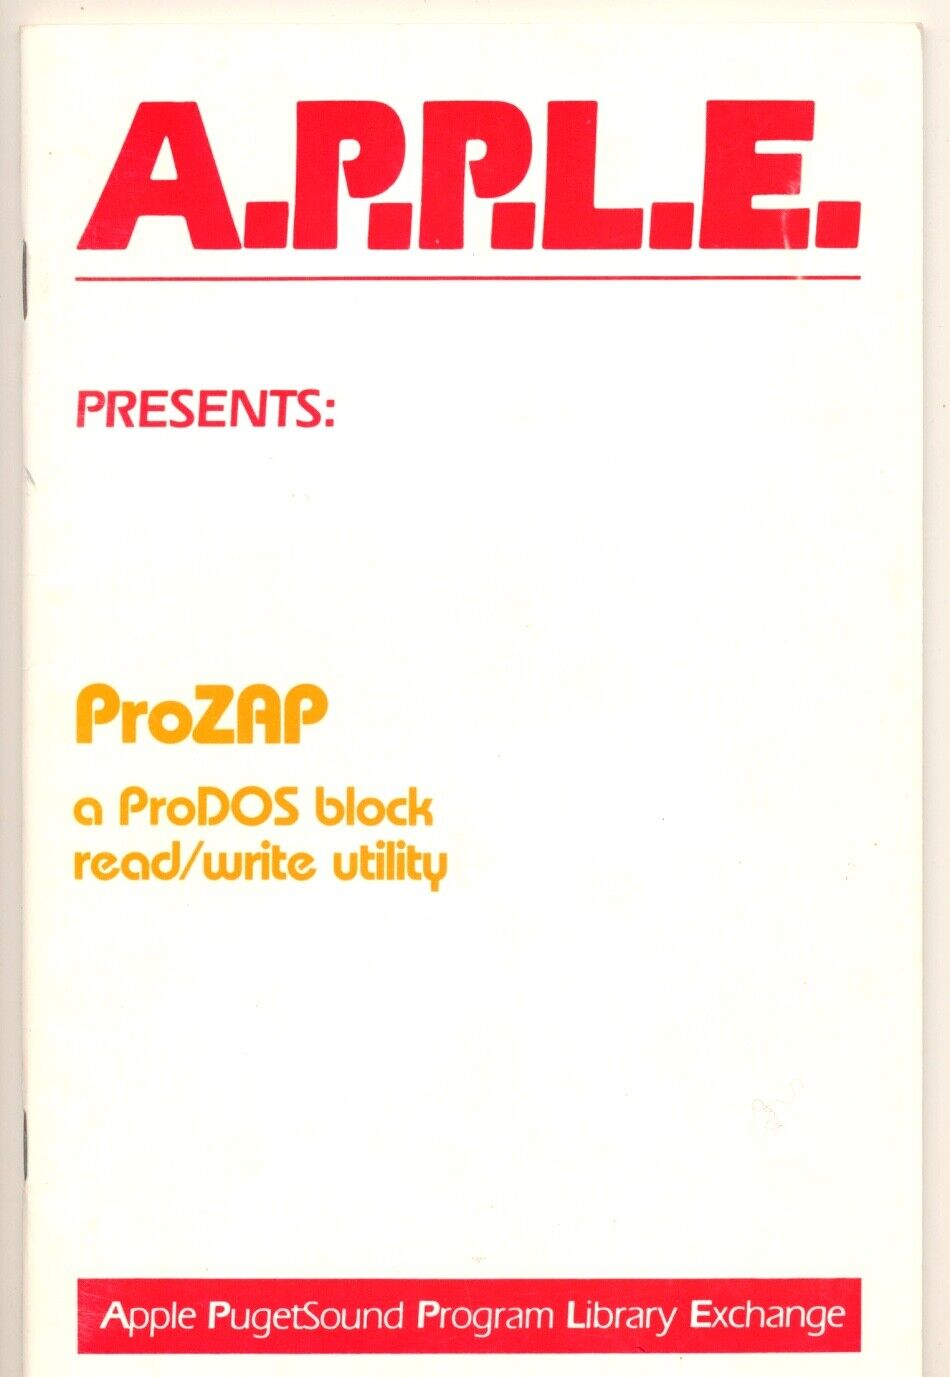 1984 - NEW Condition A.P.P.L.E. ProZAP Manual - 33 Pages